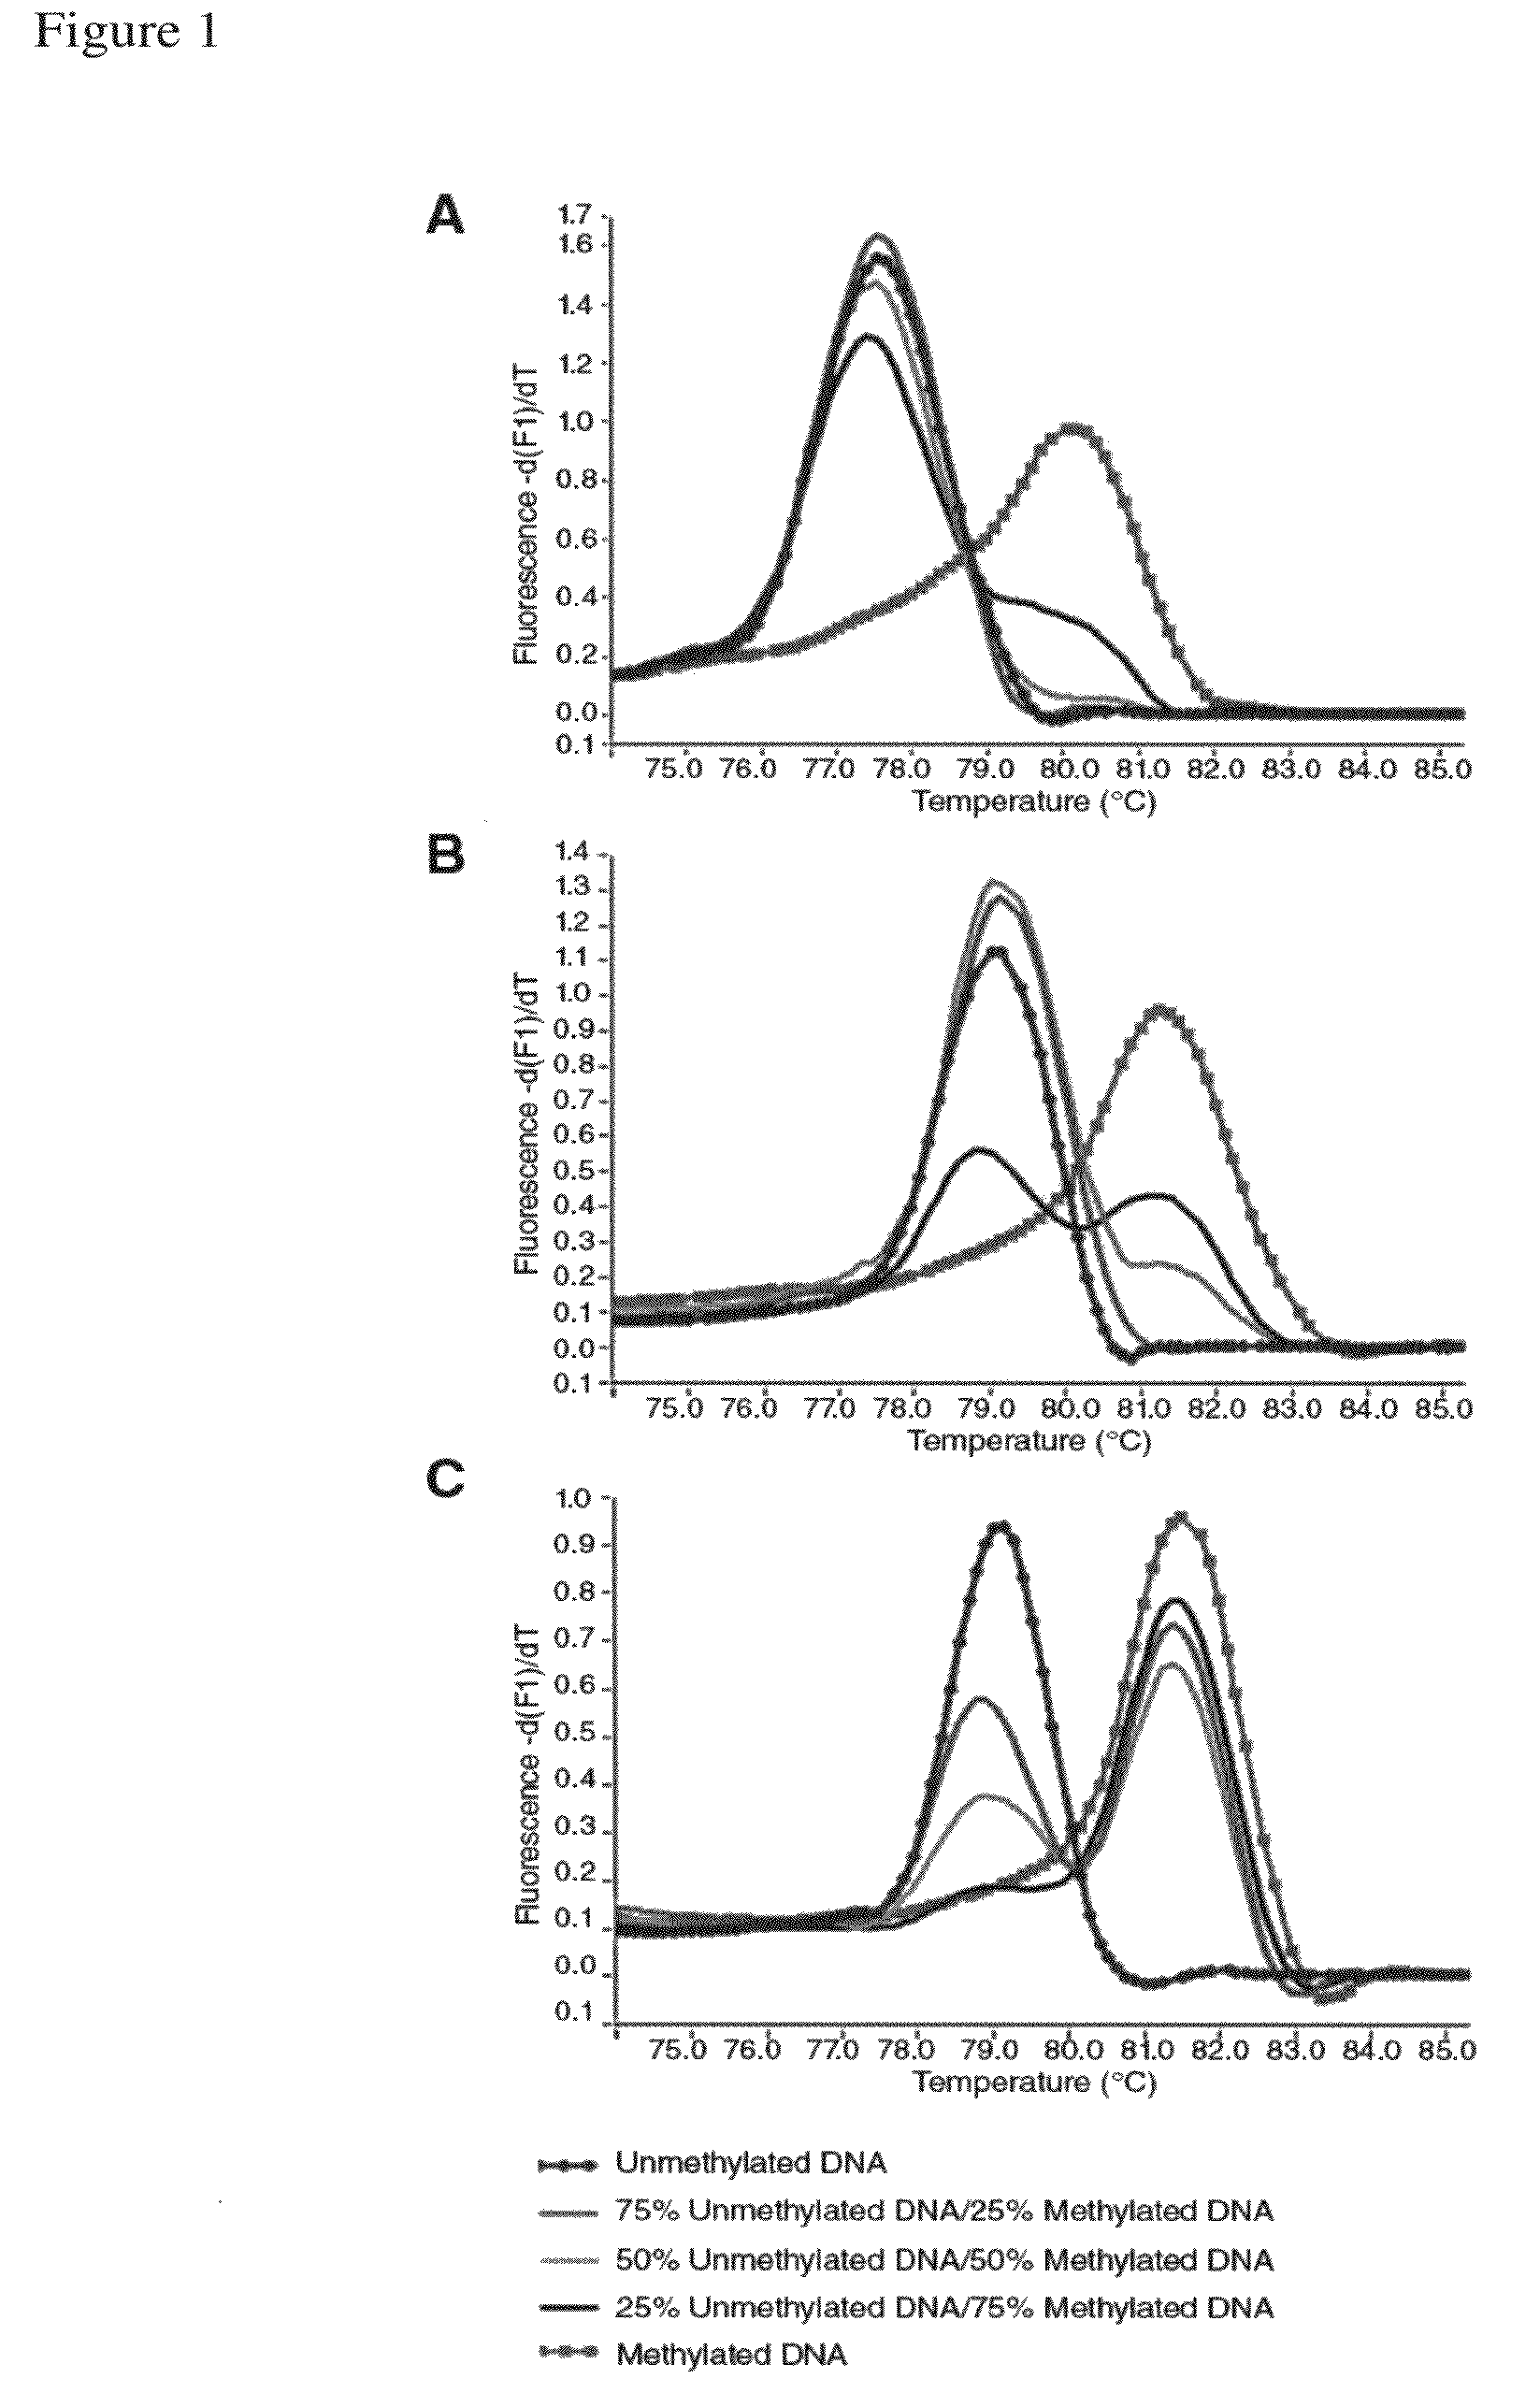 Method for detecting methylation status by using methylation-independent primers